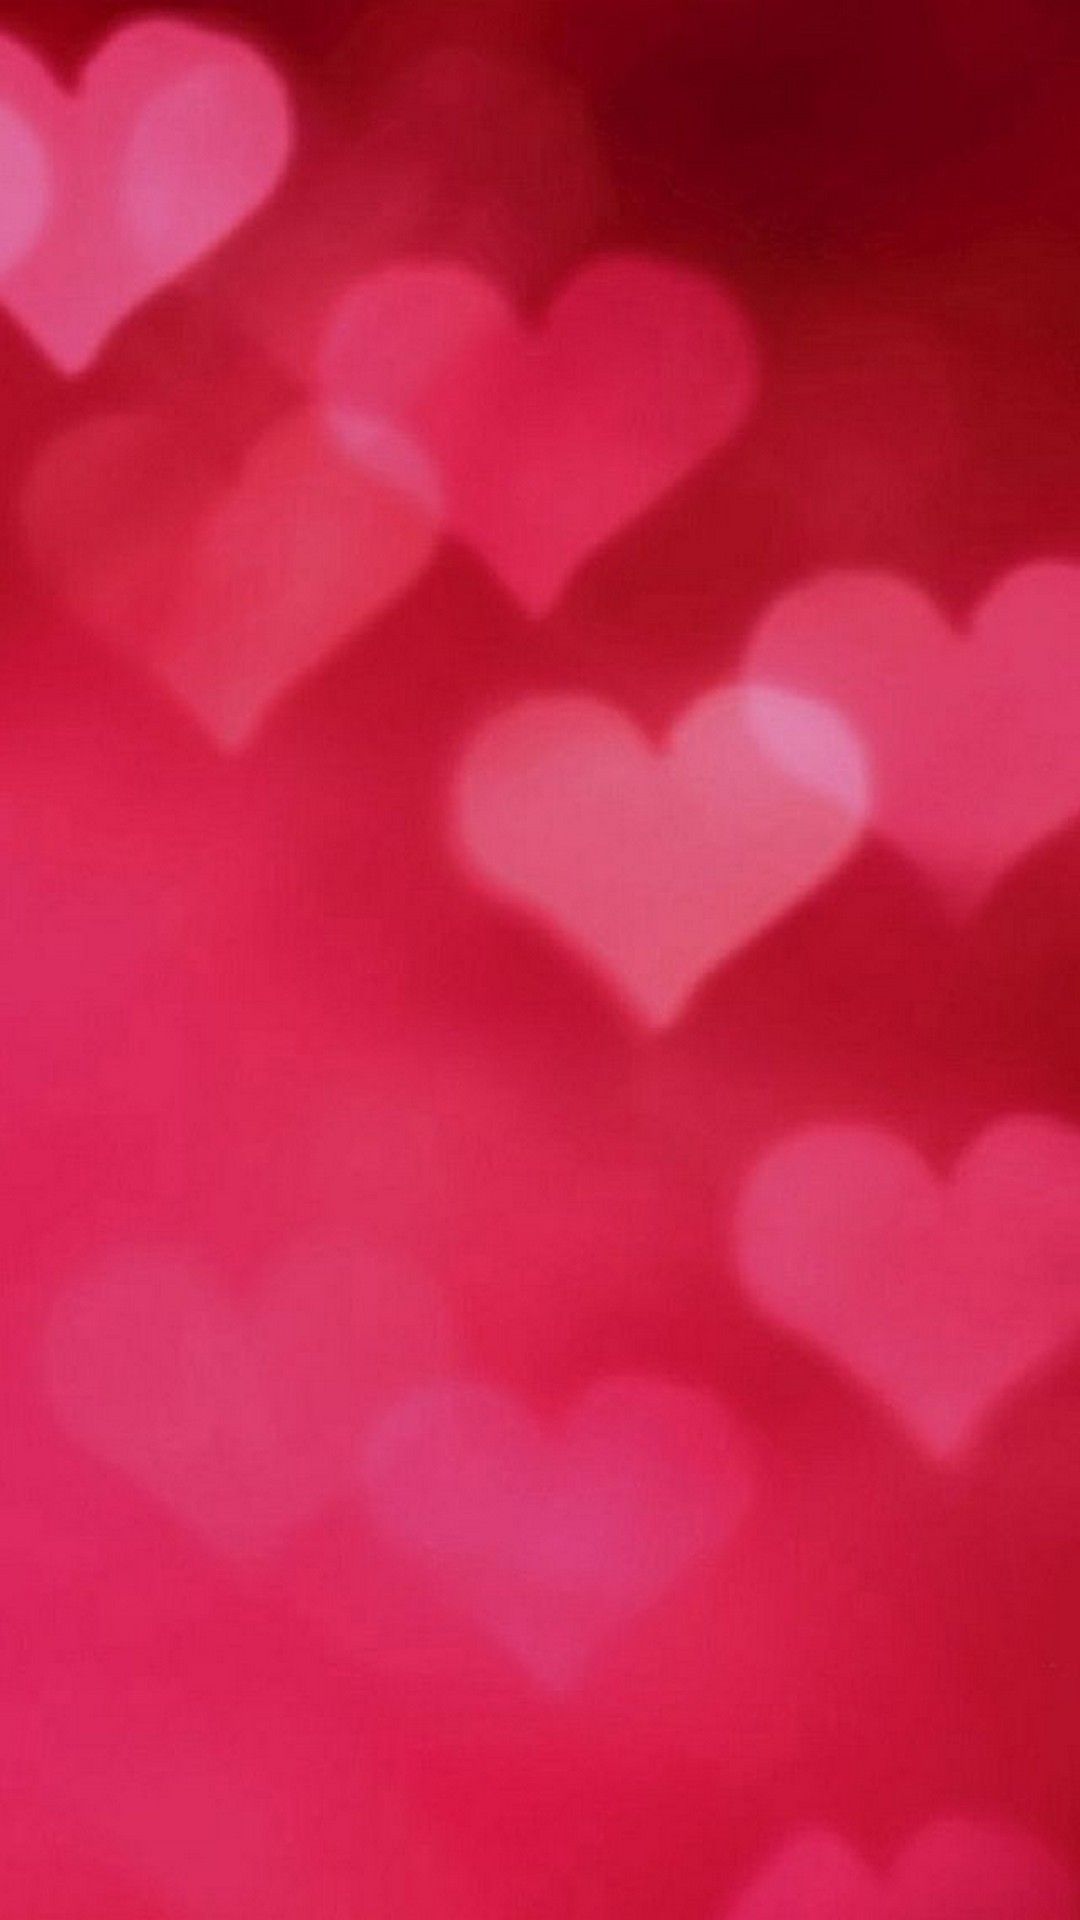 Valentines Day Wallpaper iPhone 6. Best HD Wallpaper. Valentines wallpaper iphone, Valentines wallpaper, iPhone wallpaper vintage